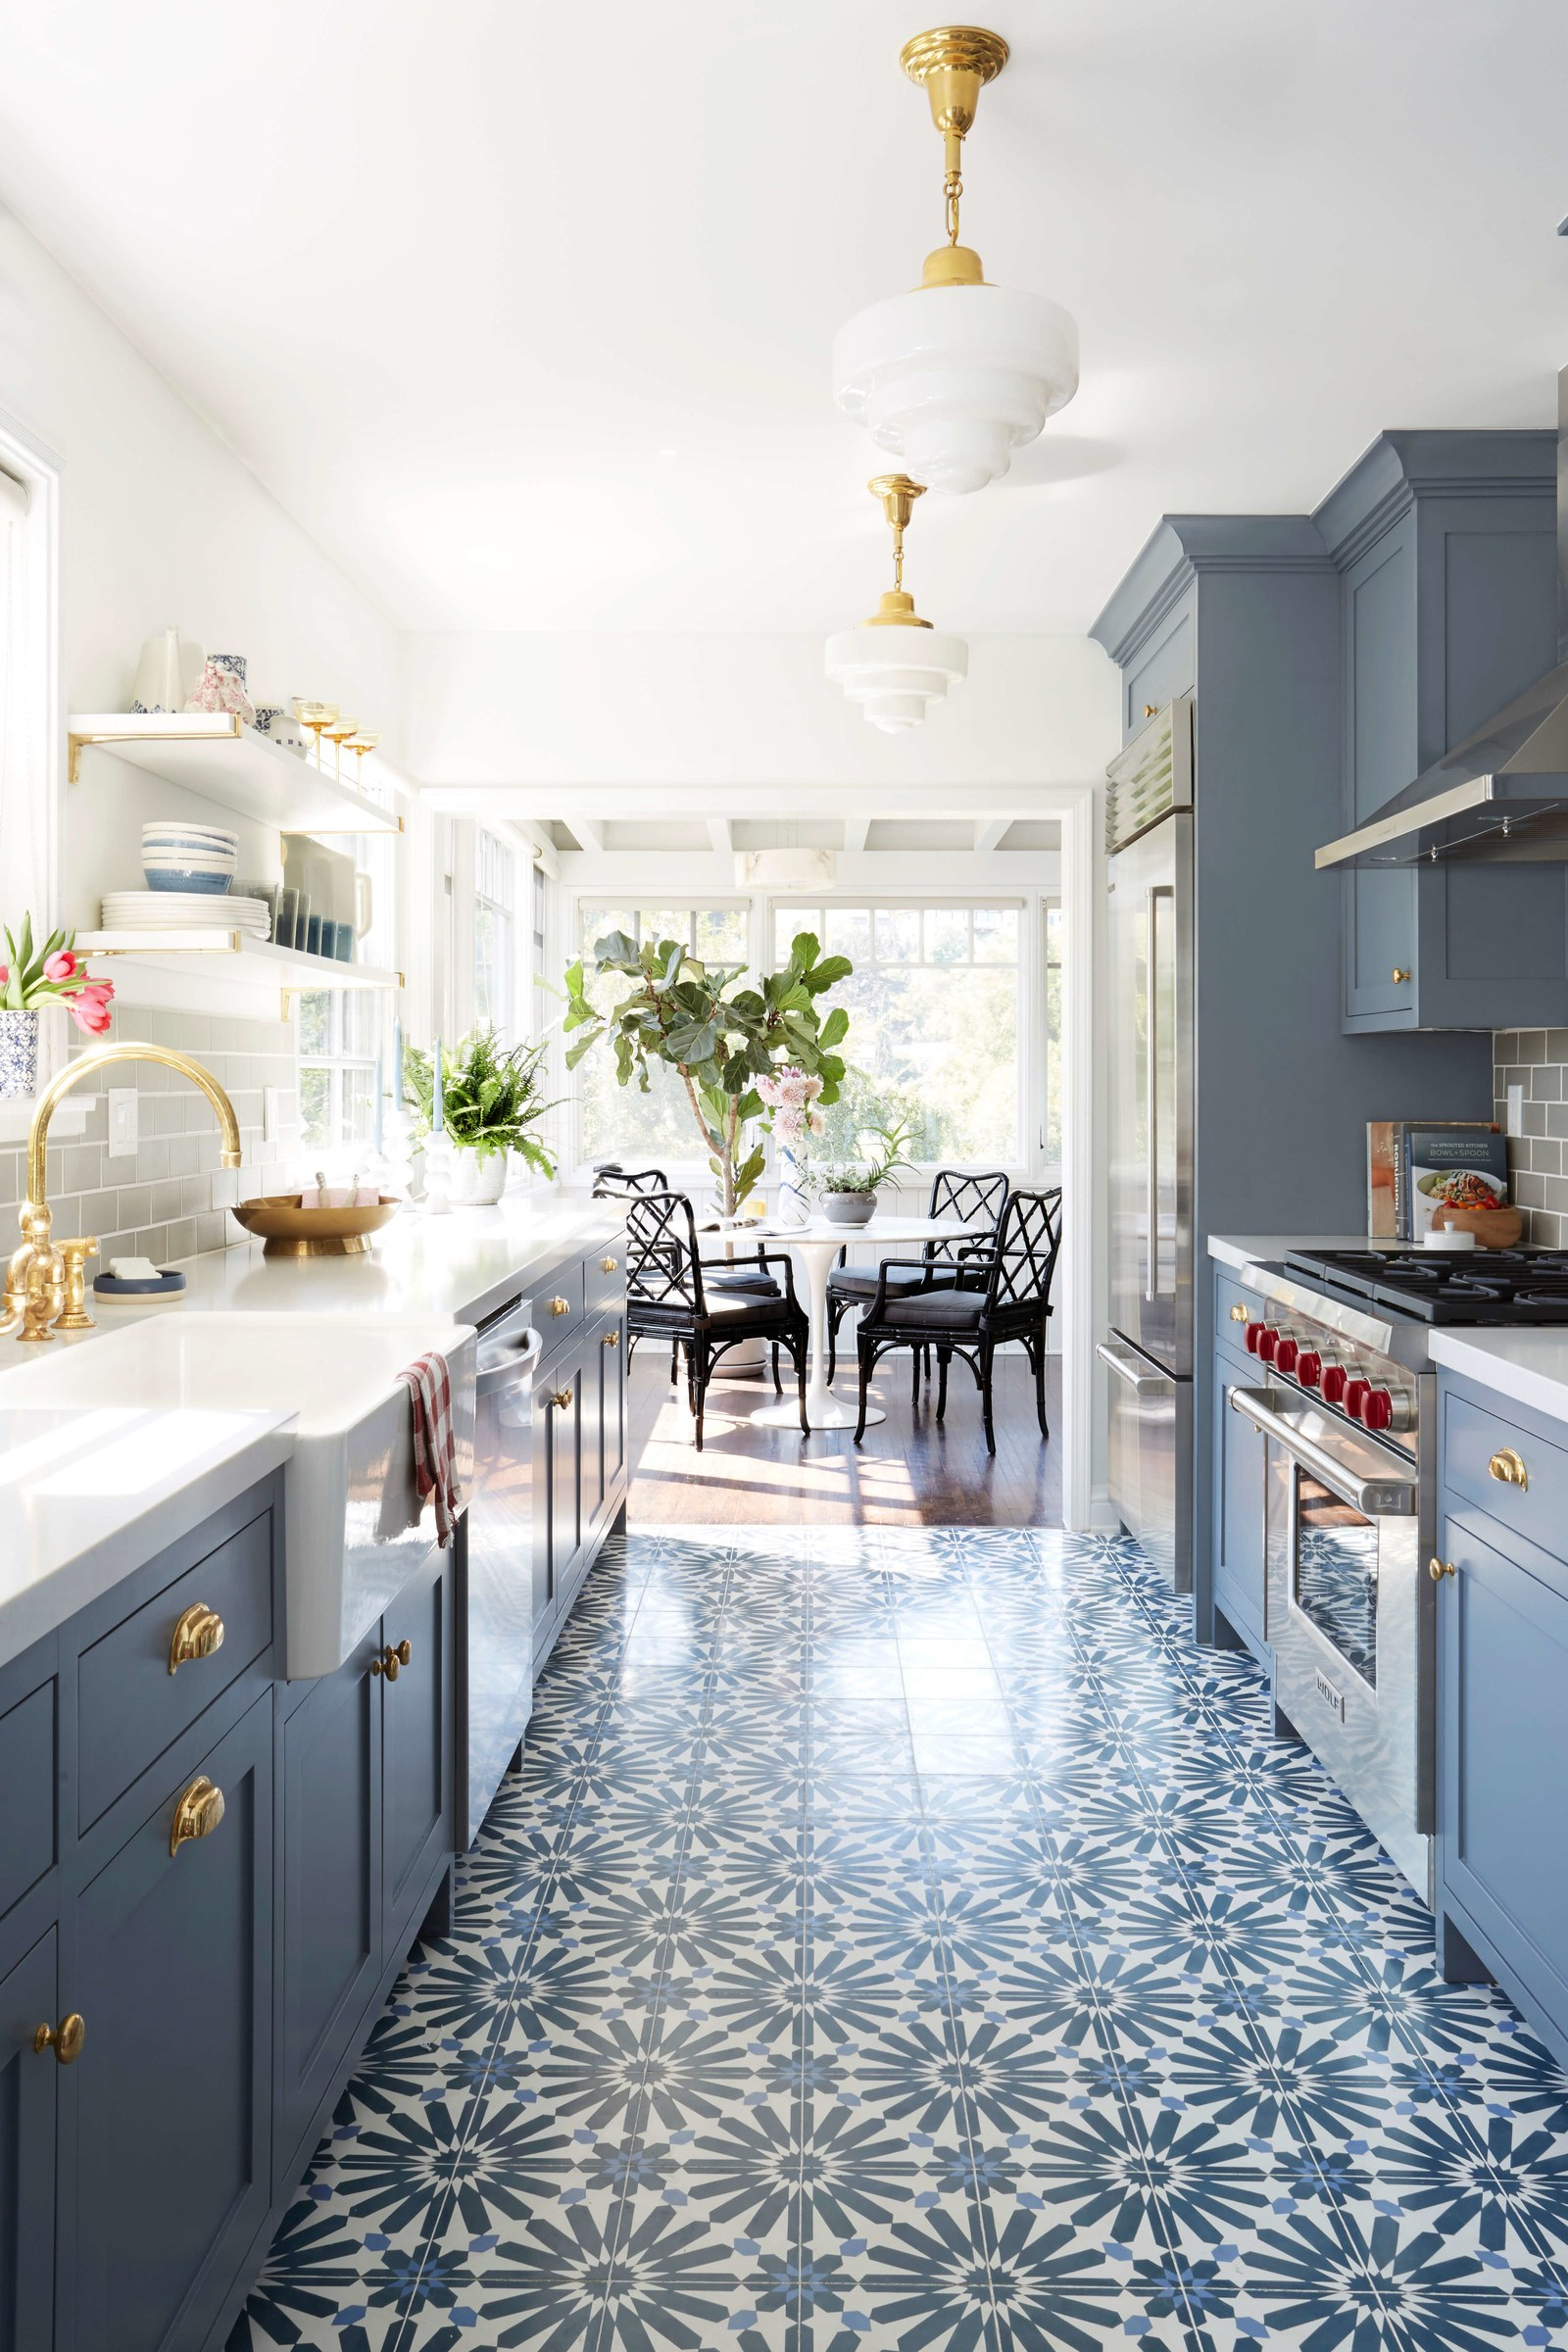 10 Elegant Kitchen Ideas For A Small Kitchen small galley kitchen ideas design inspiration architectural digest 2022